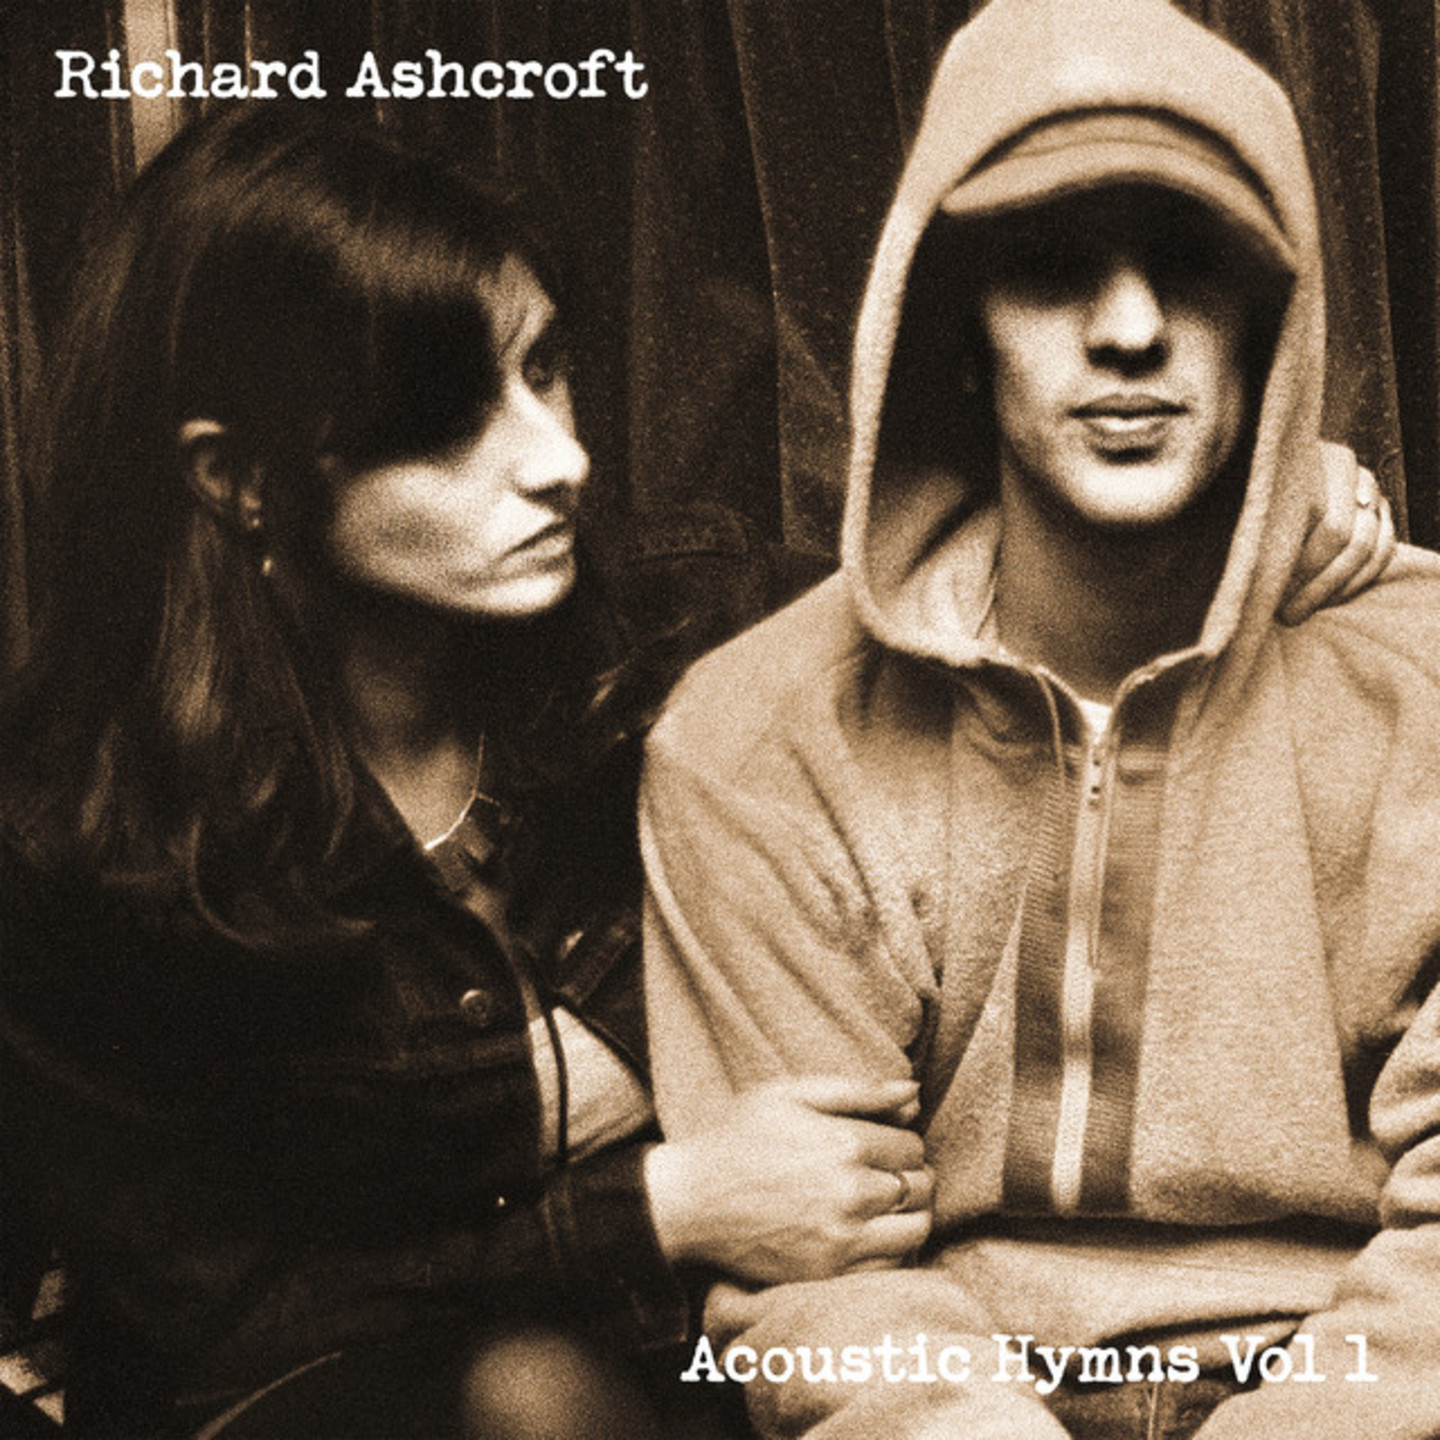 RICHARD ASHCROFT - Acoustic Hymns Vol. 1 2xLP